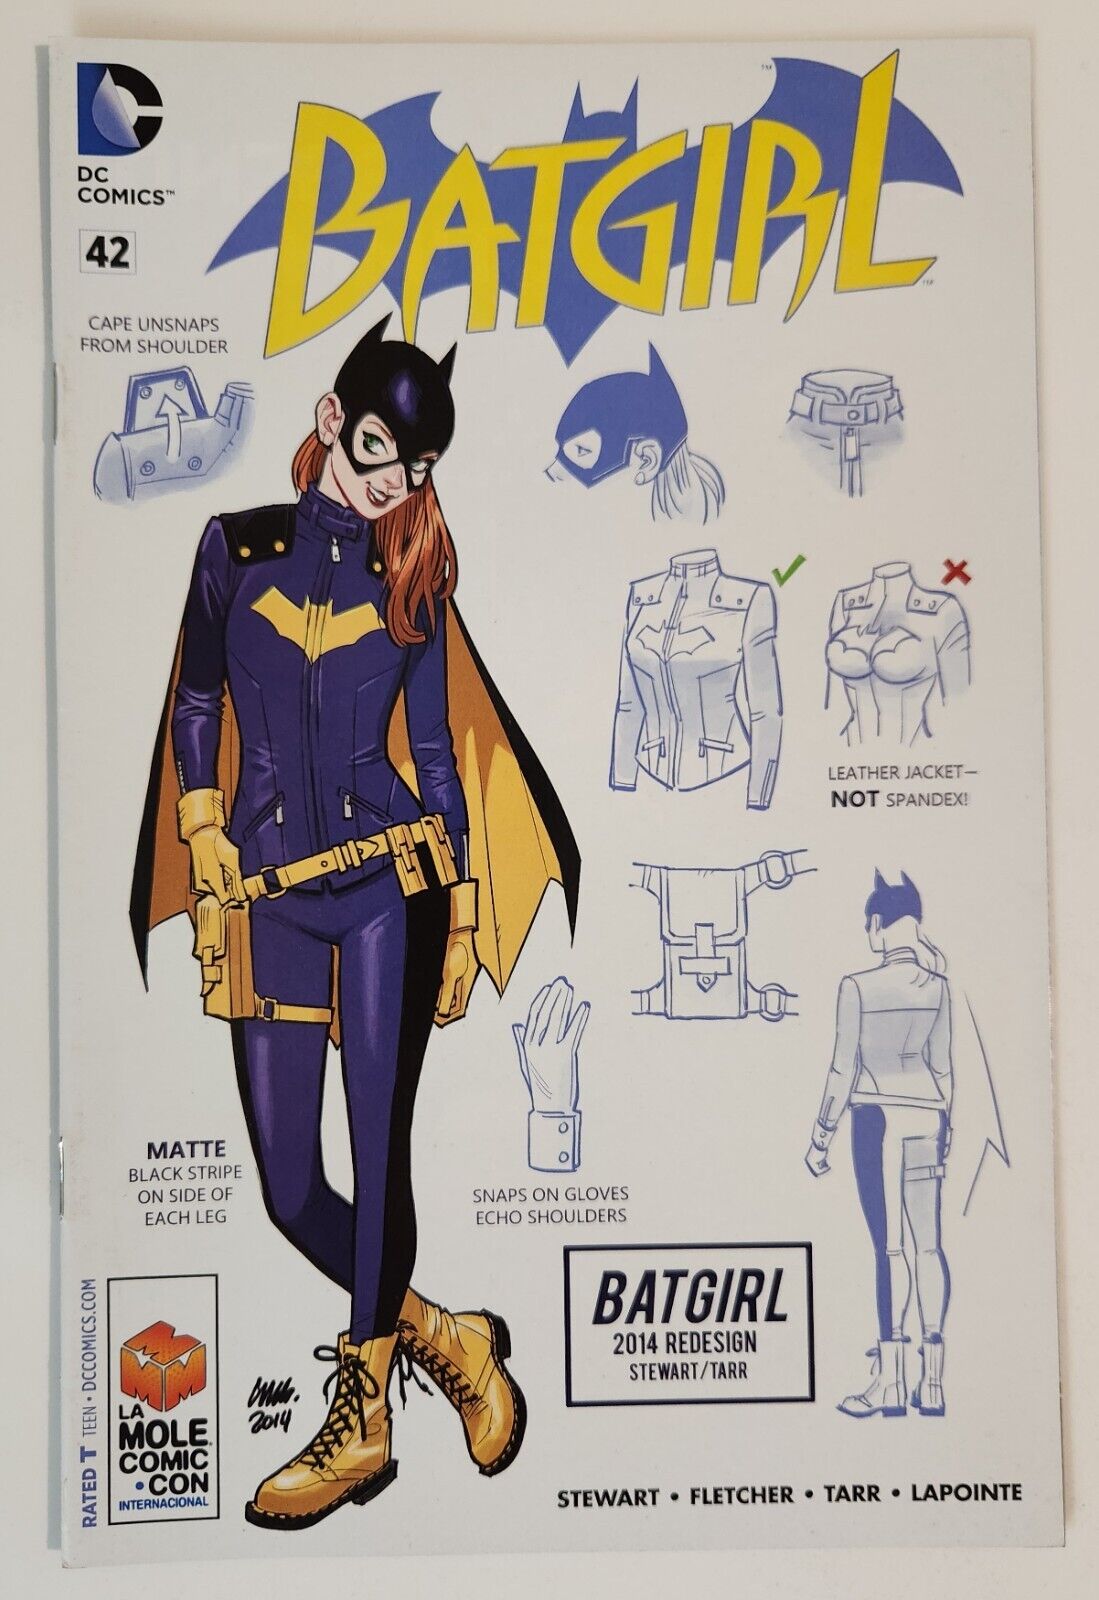 Batgirl #42 (2015, DC) VF New 52 La Mole Comic Con Redesign Variant Babs Tarr